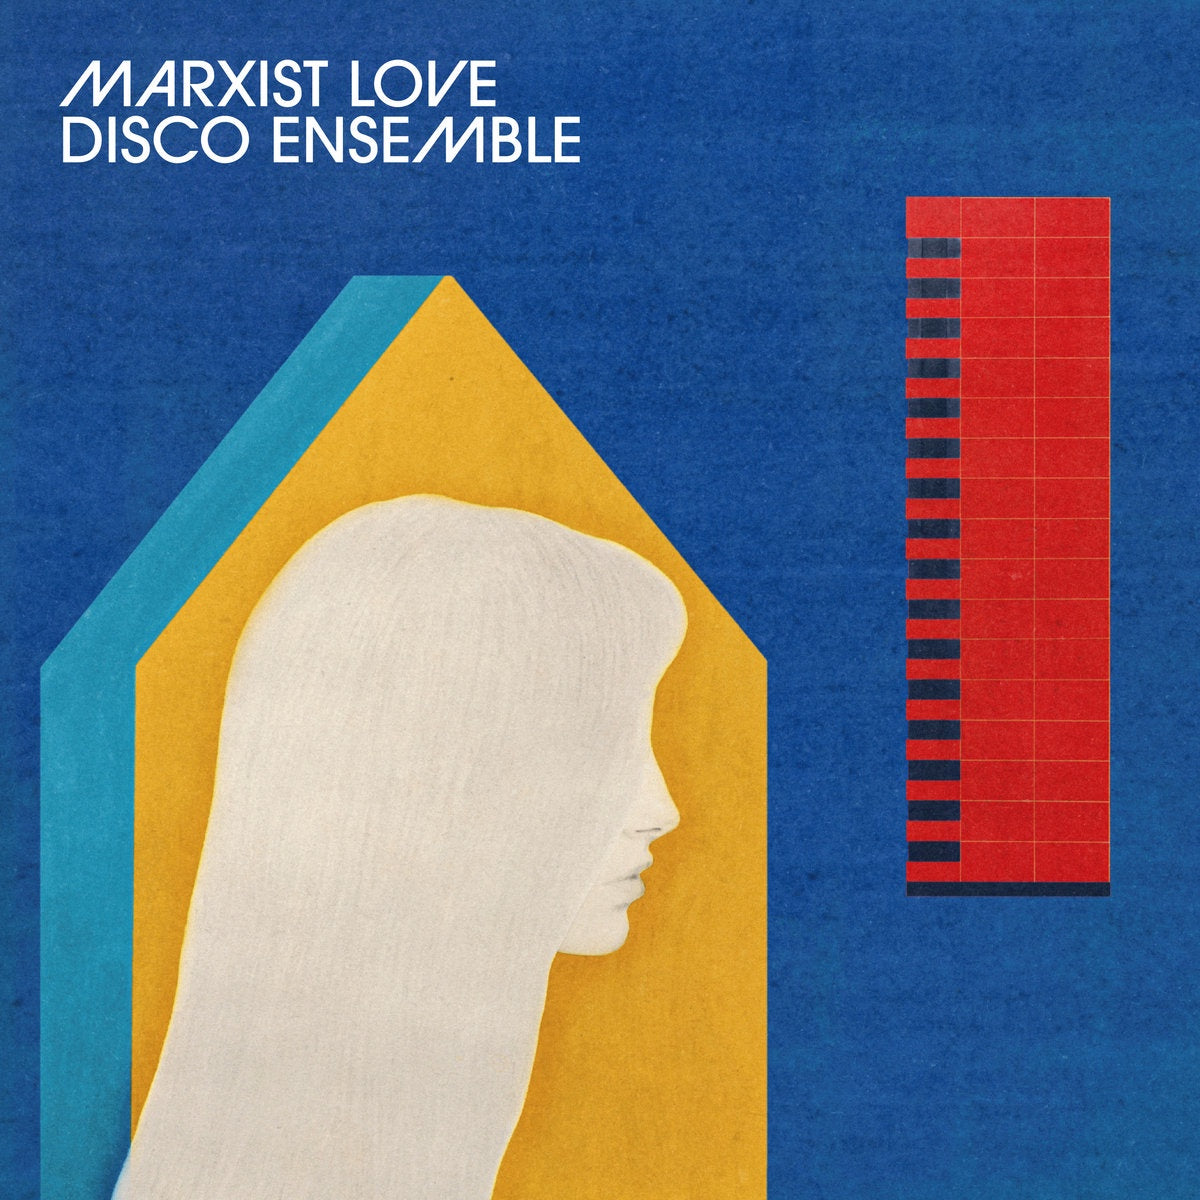 Marxist Love Disco Ensemble – MLDE